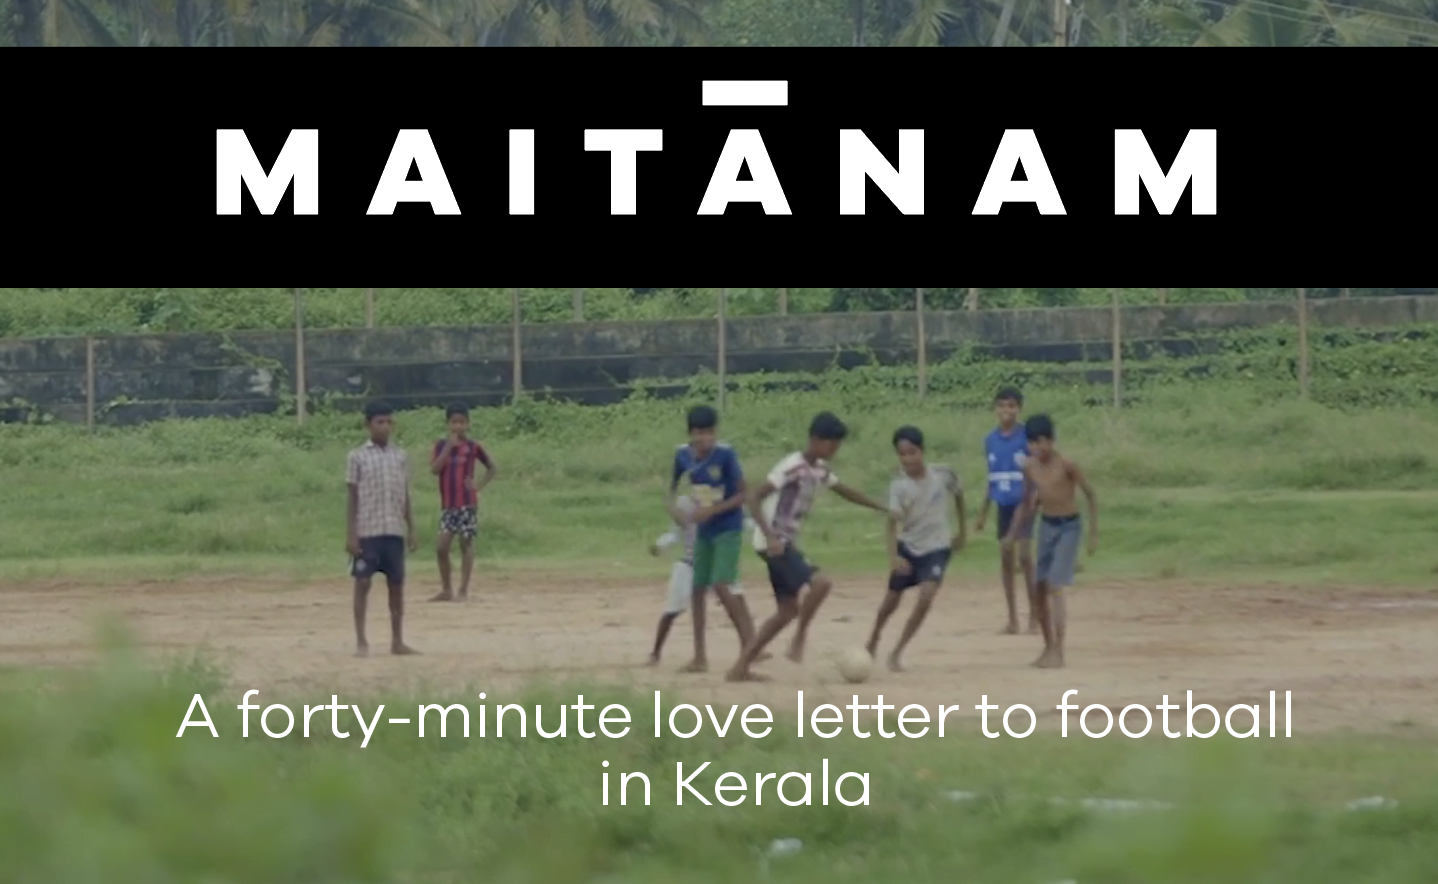 Streaming platform FIFA+ launches India’s first sports documentary ‘Maitanam’